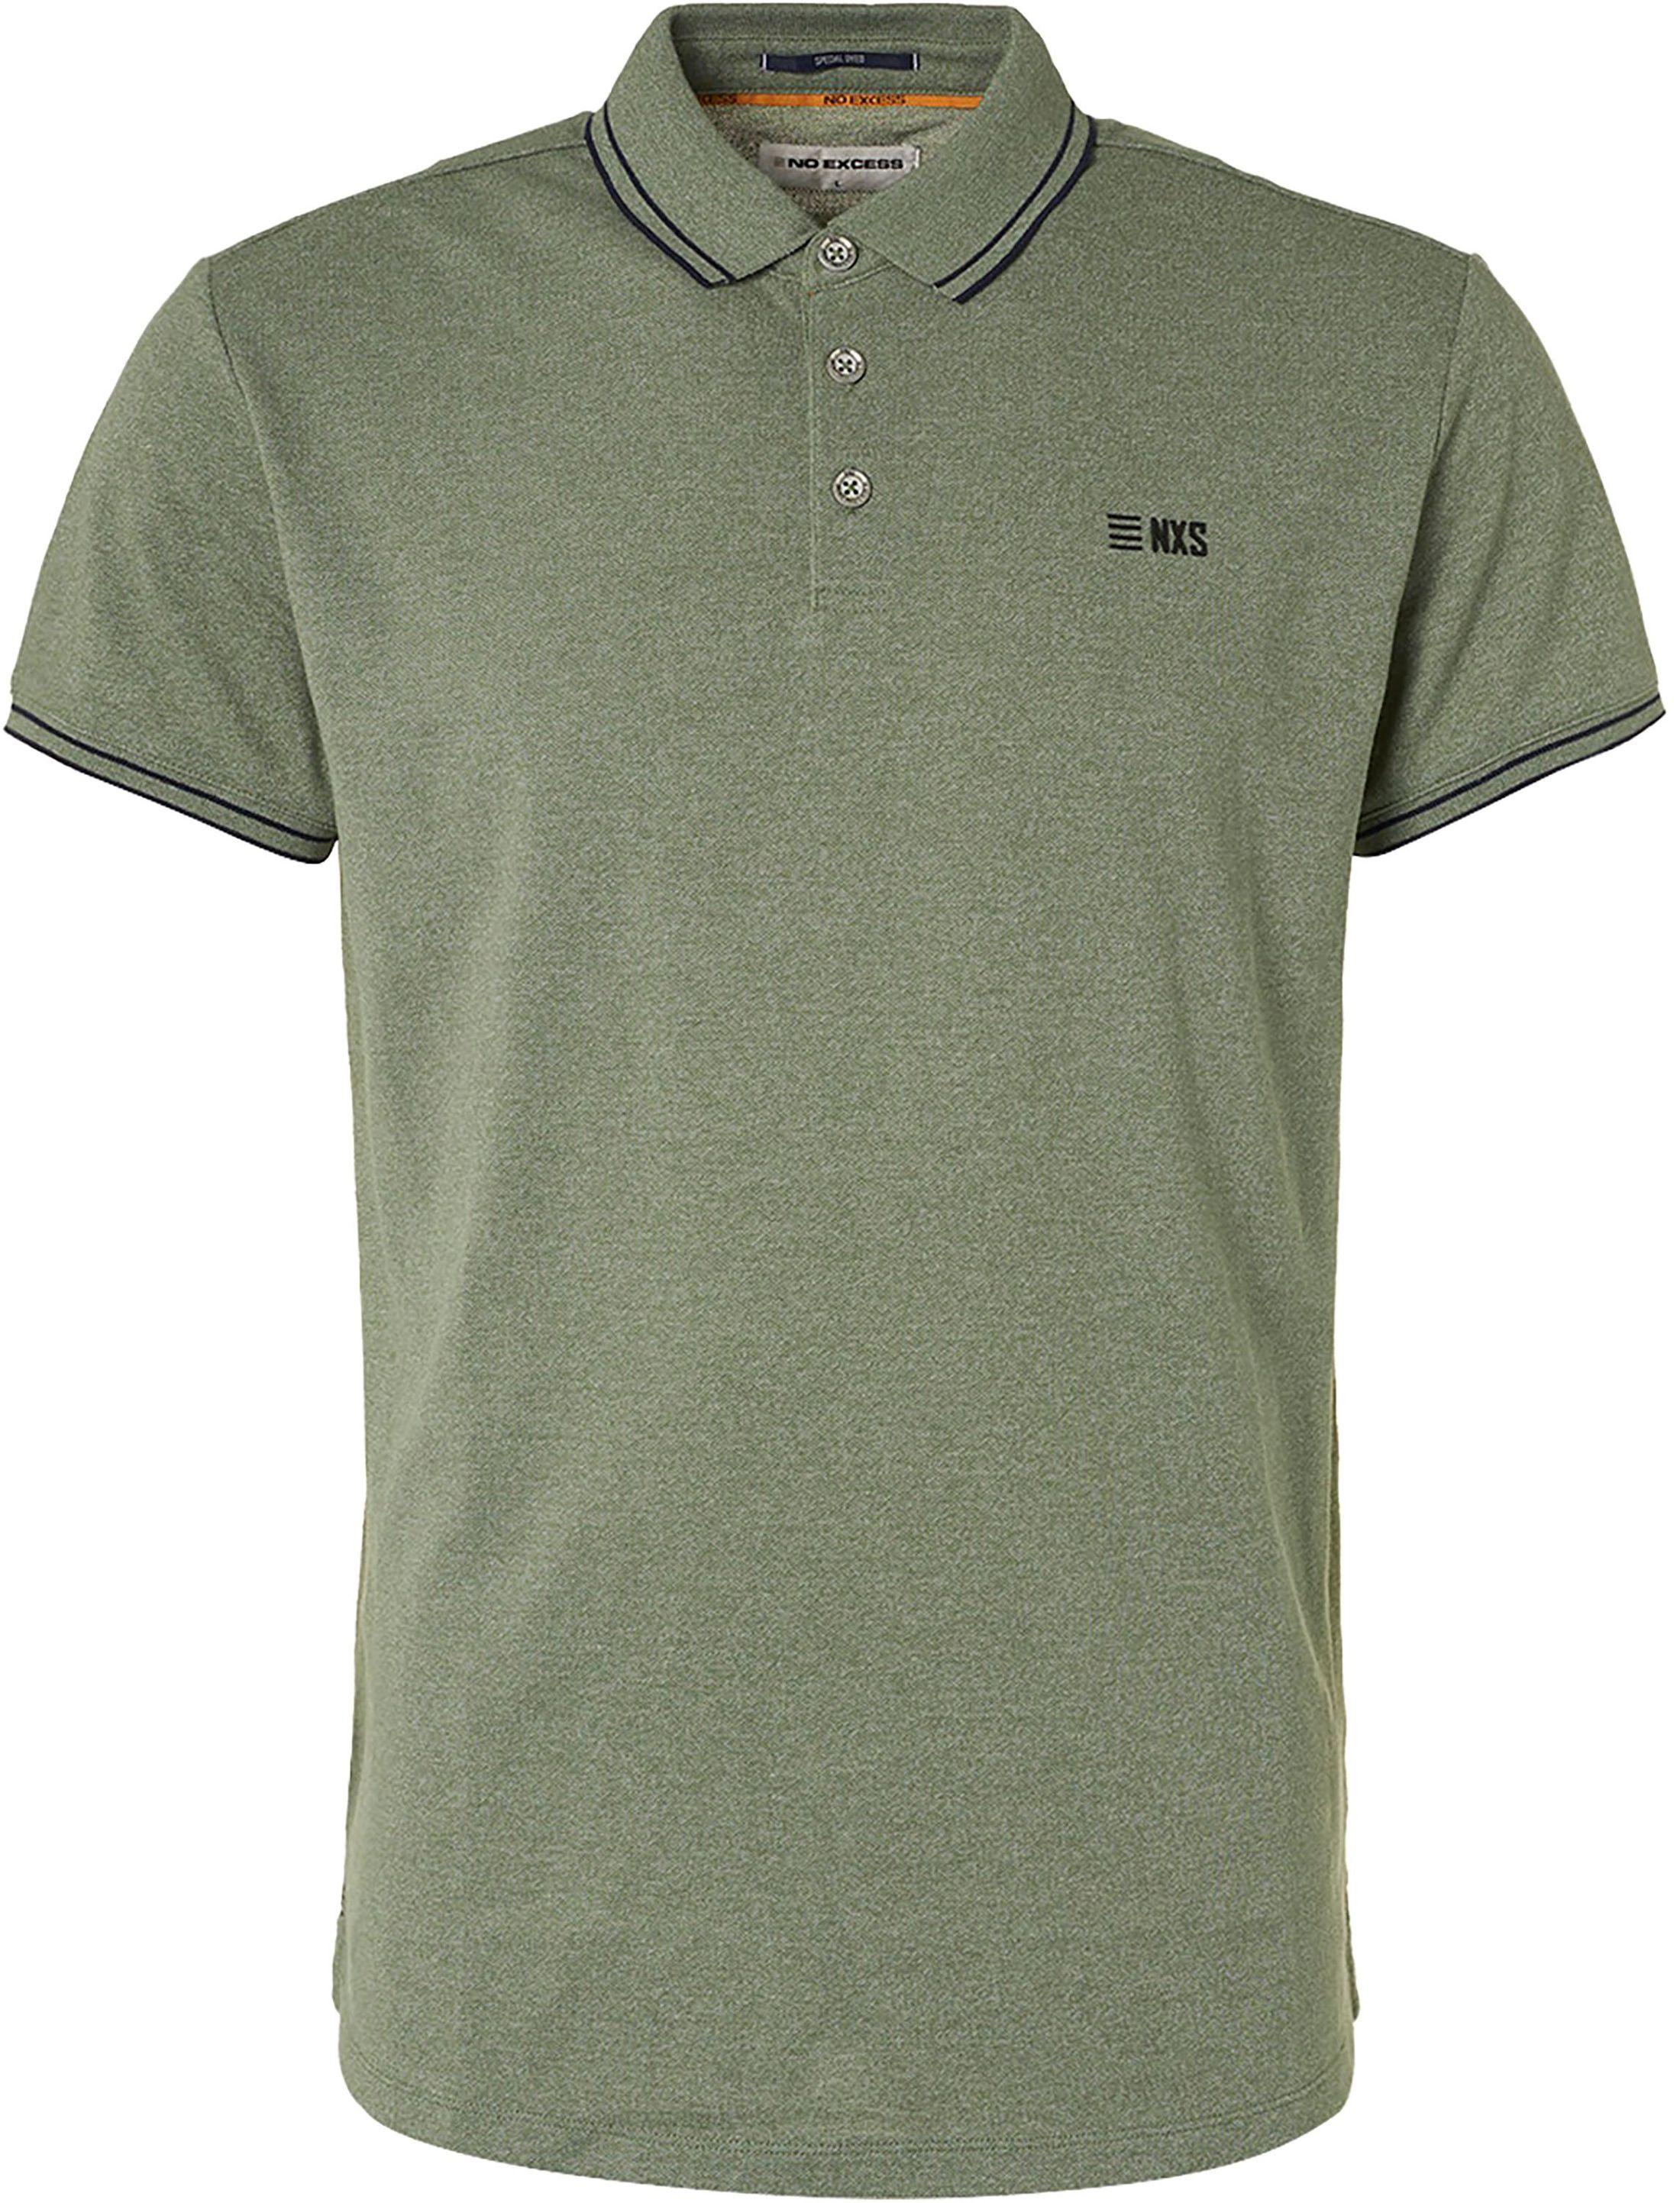 No-Excess Polo Shirt Garment Dye Olive Green size M